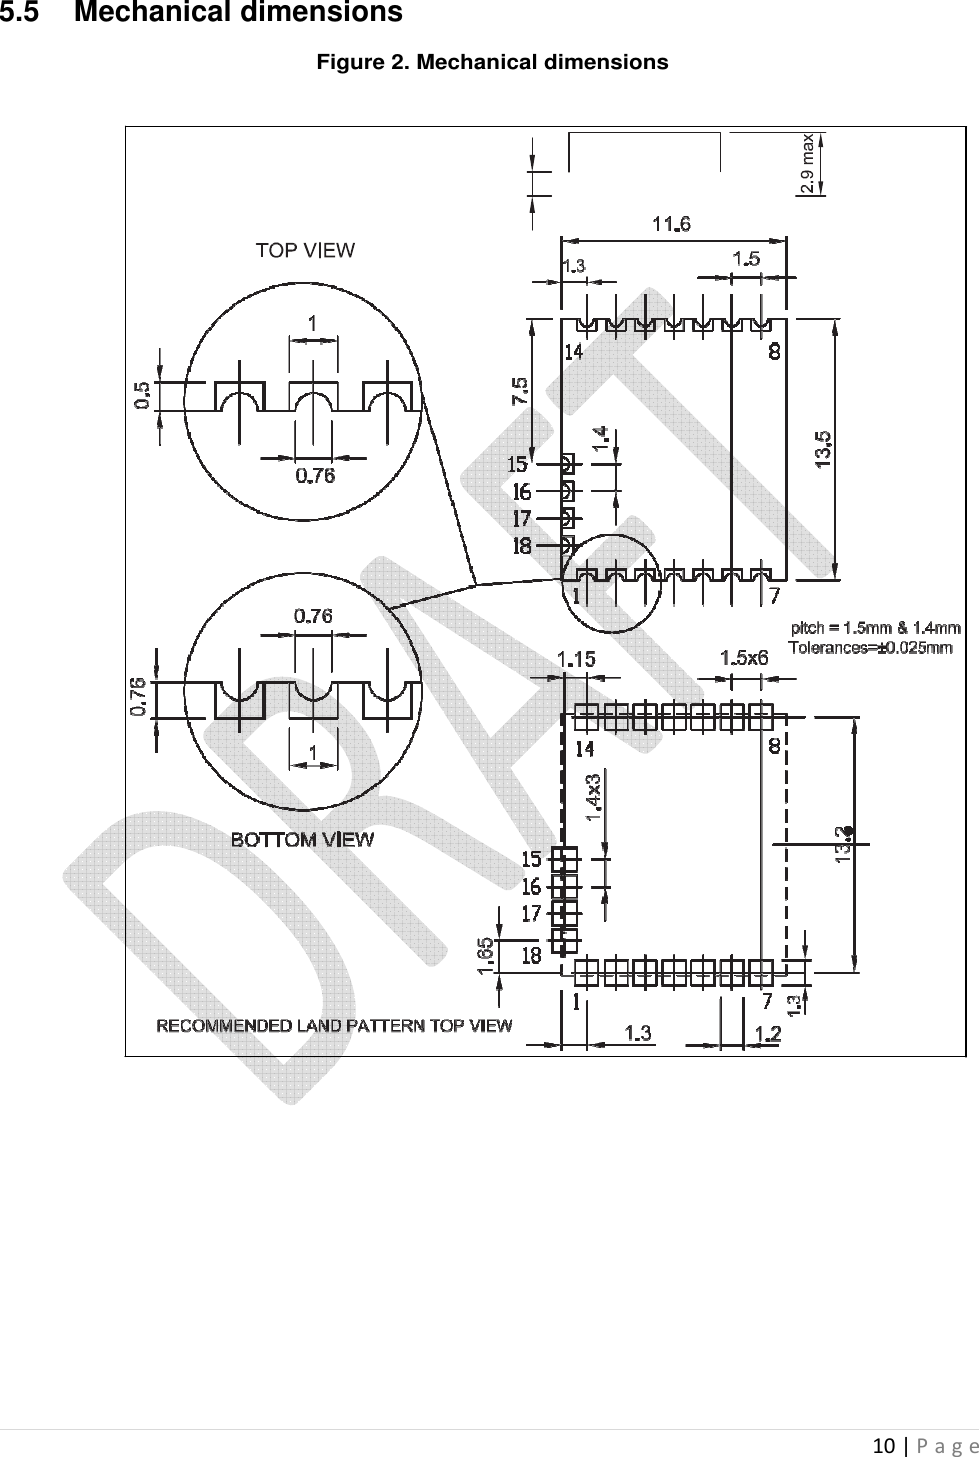  10 | P a g e     5.5   Mechanical dimensions  Figure 2. Mechanical dimensions                                                                          